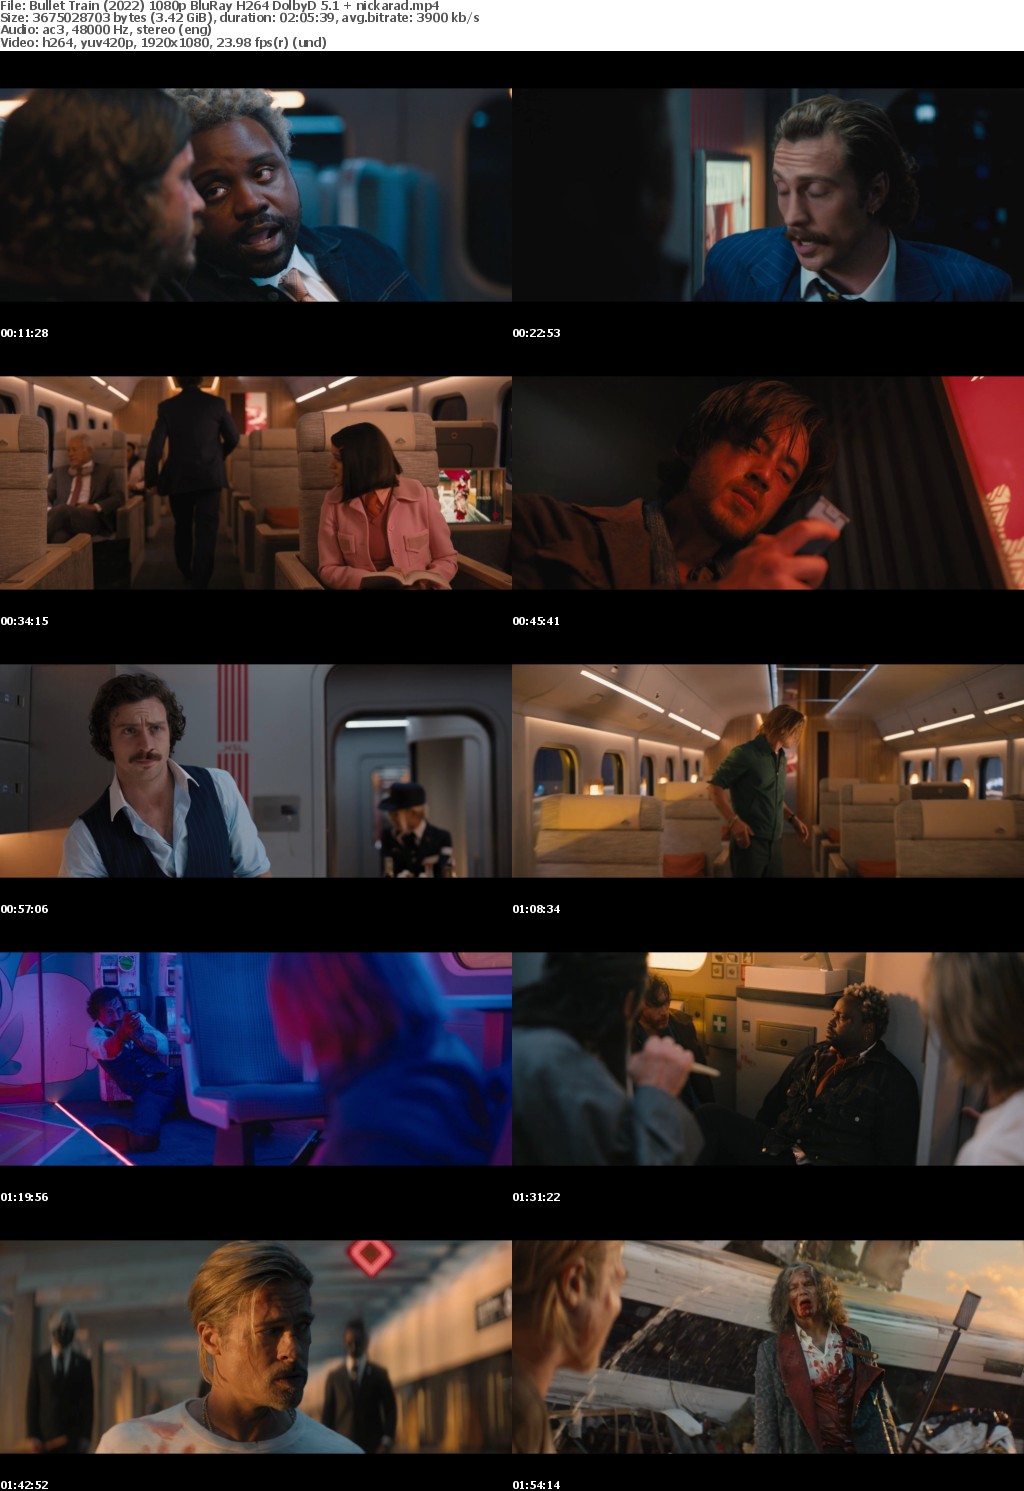 Bullet Train (2022) 1080p BluRay H264 DolbyD 5 1 nickarad